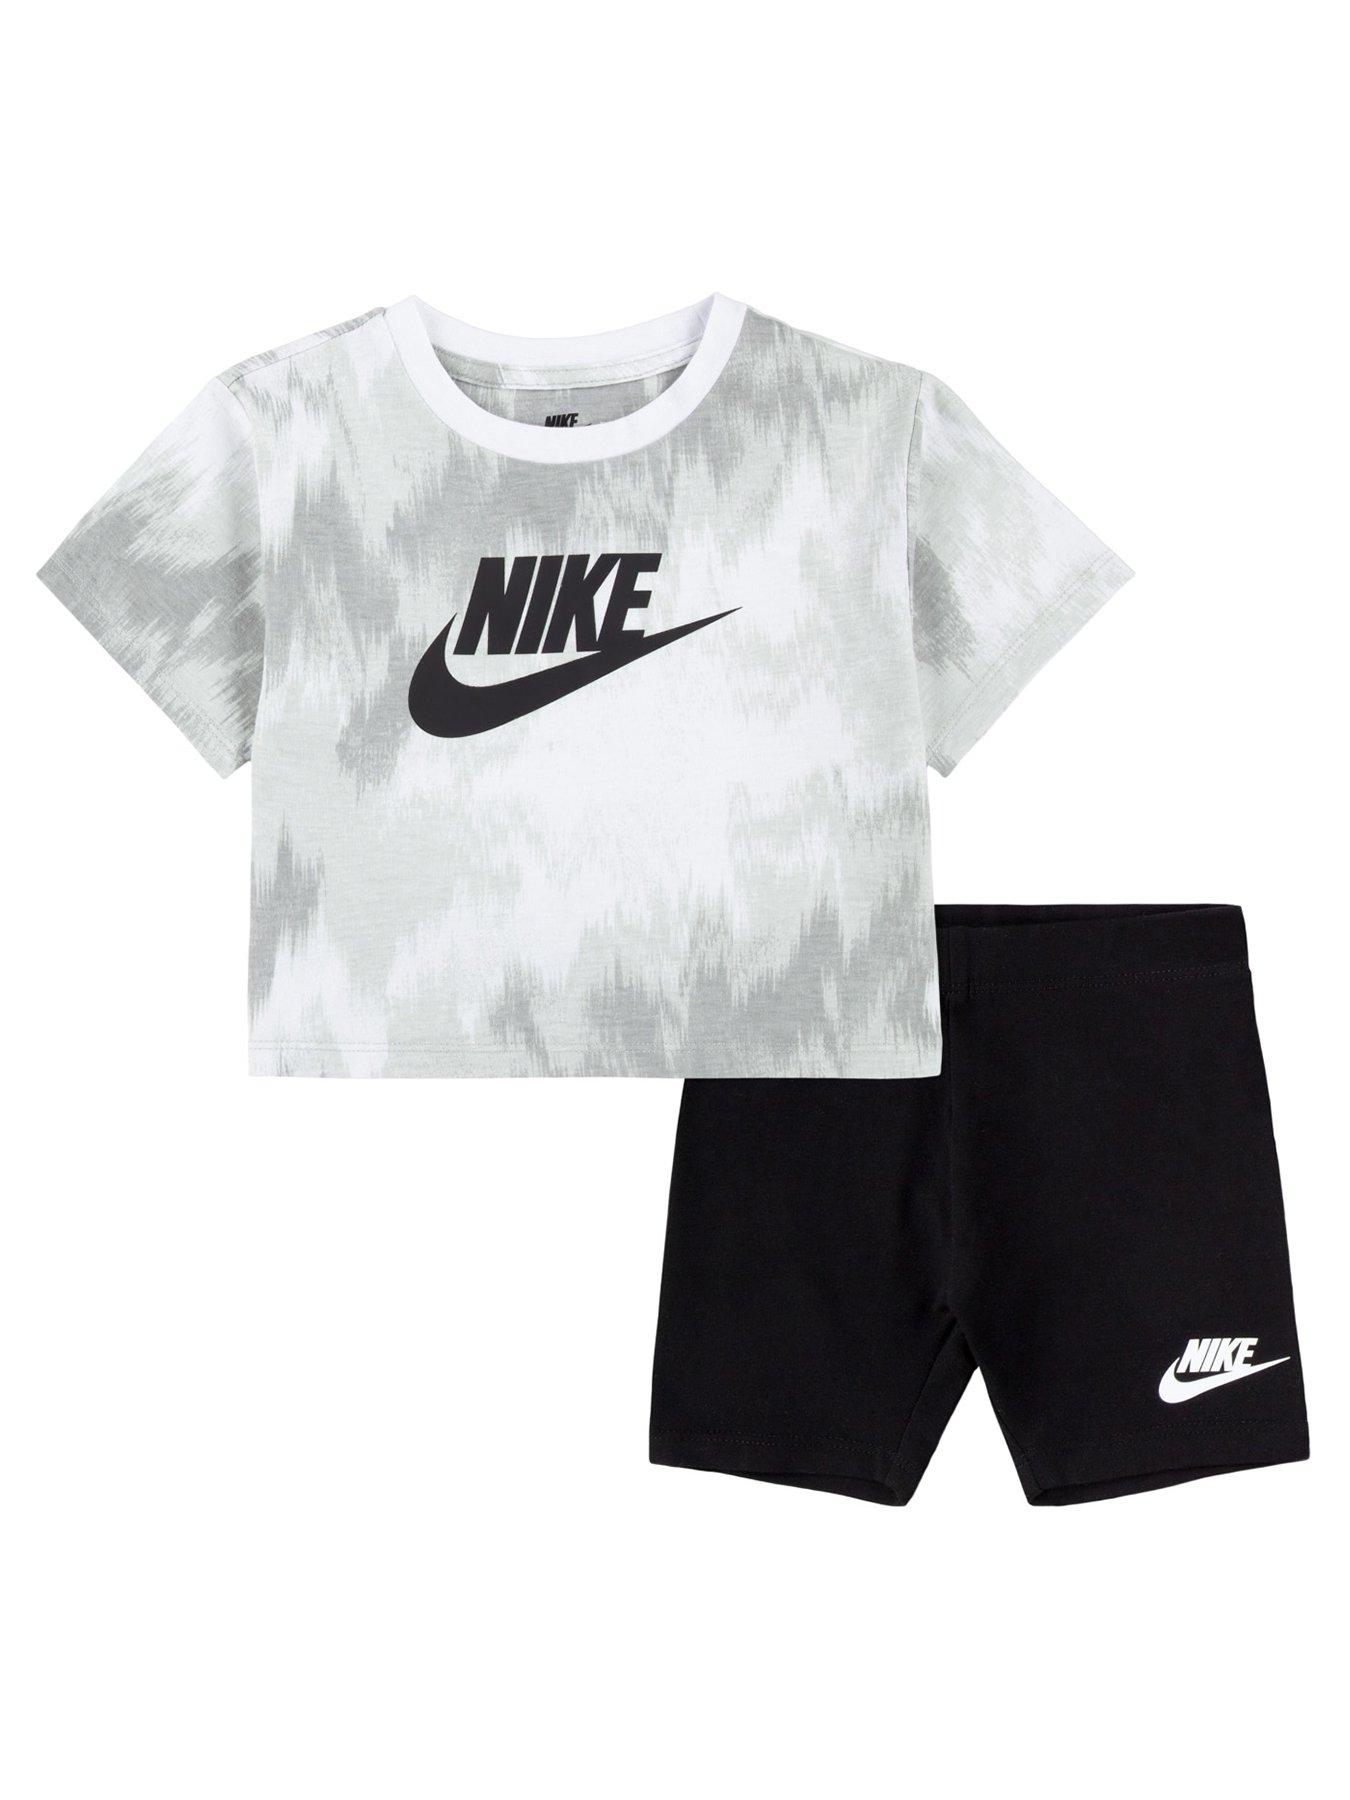 Nike, T-shirts & shorts sets, Sportswear, Child & baby